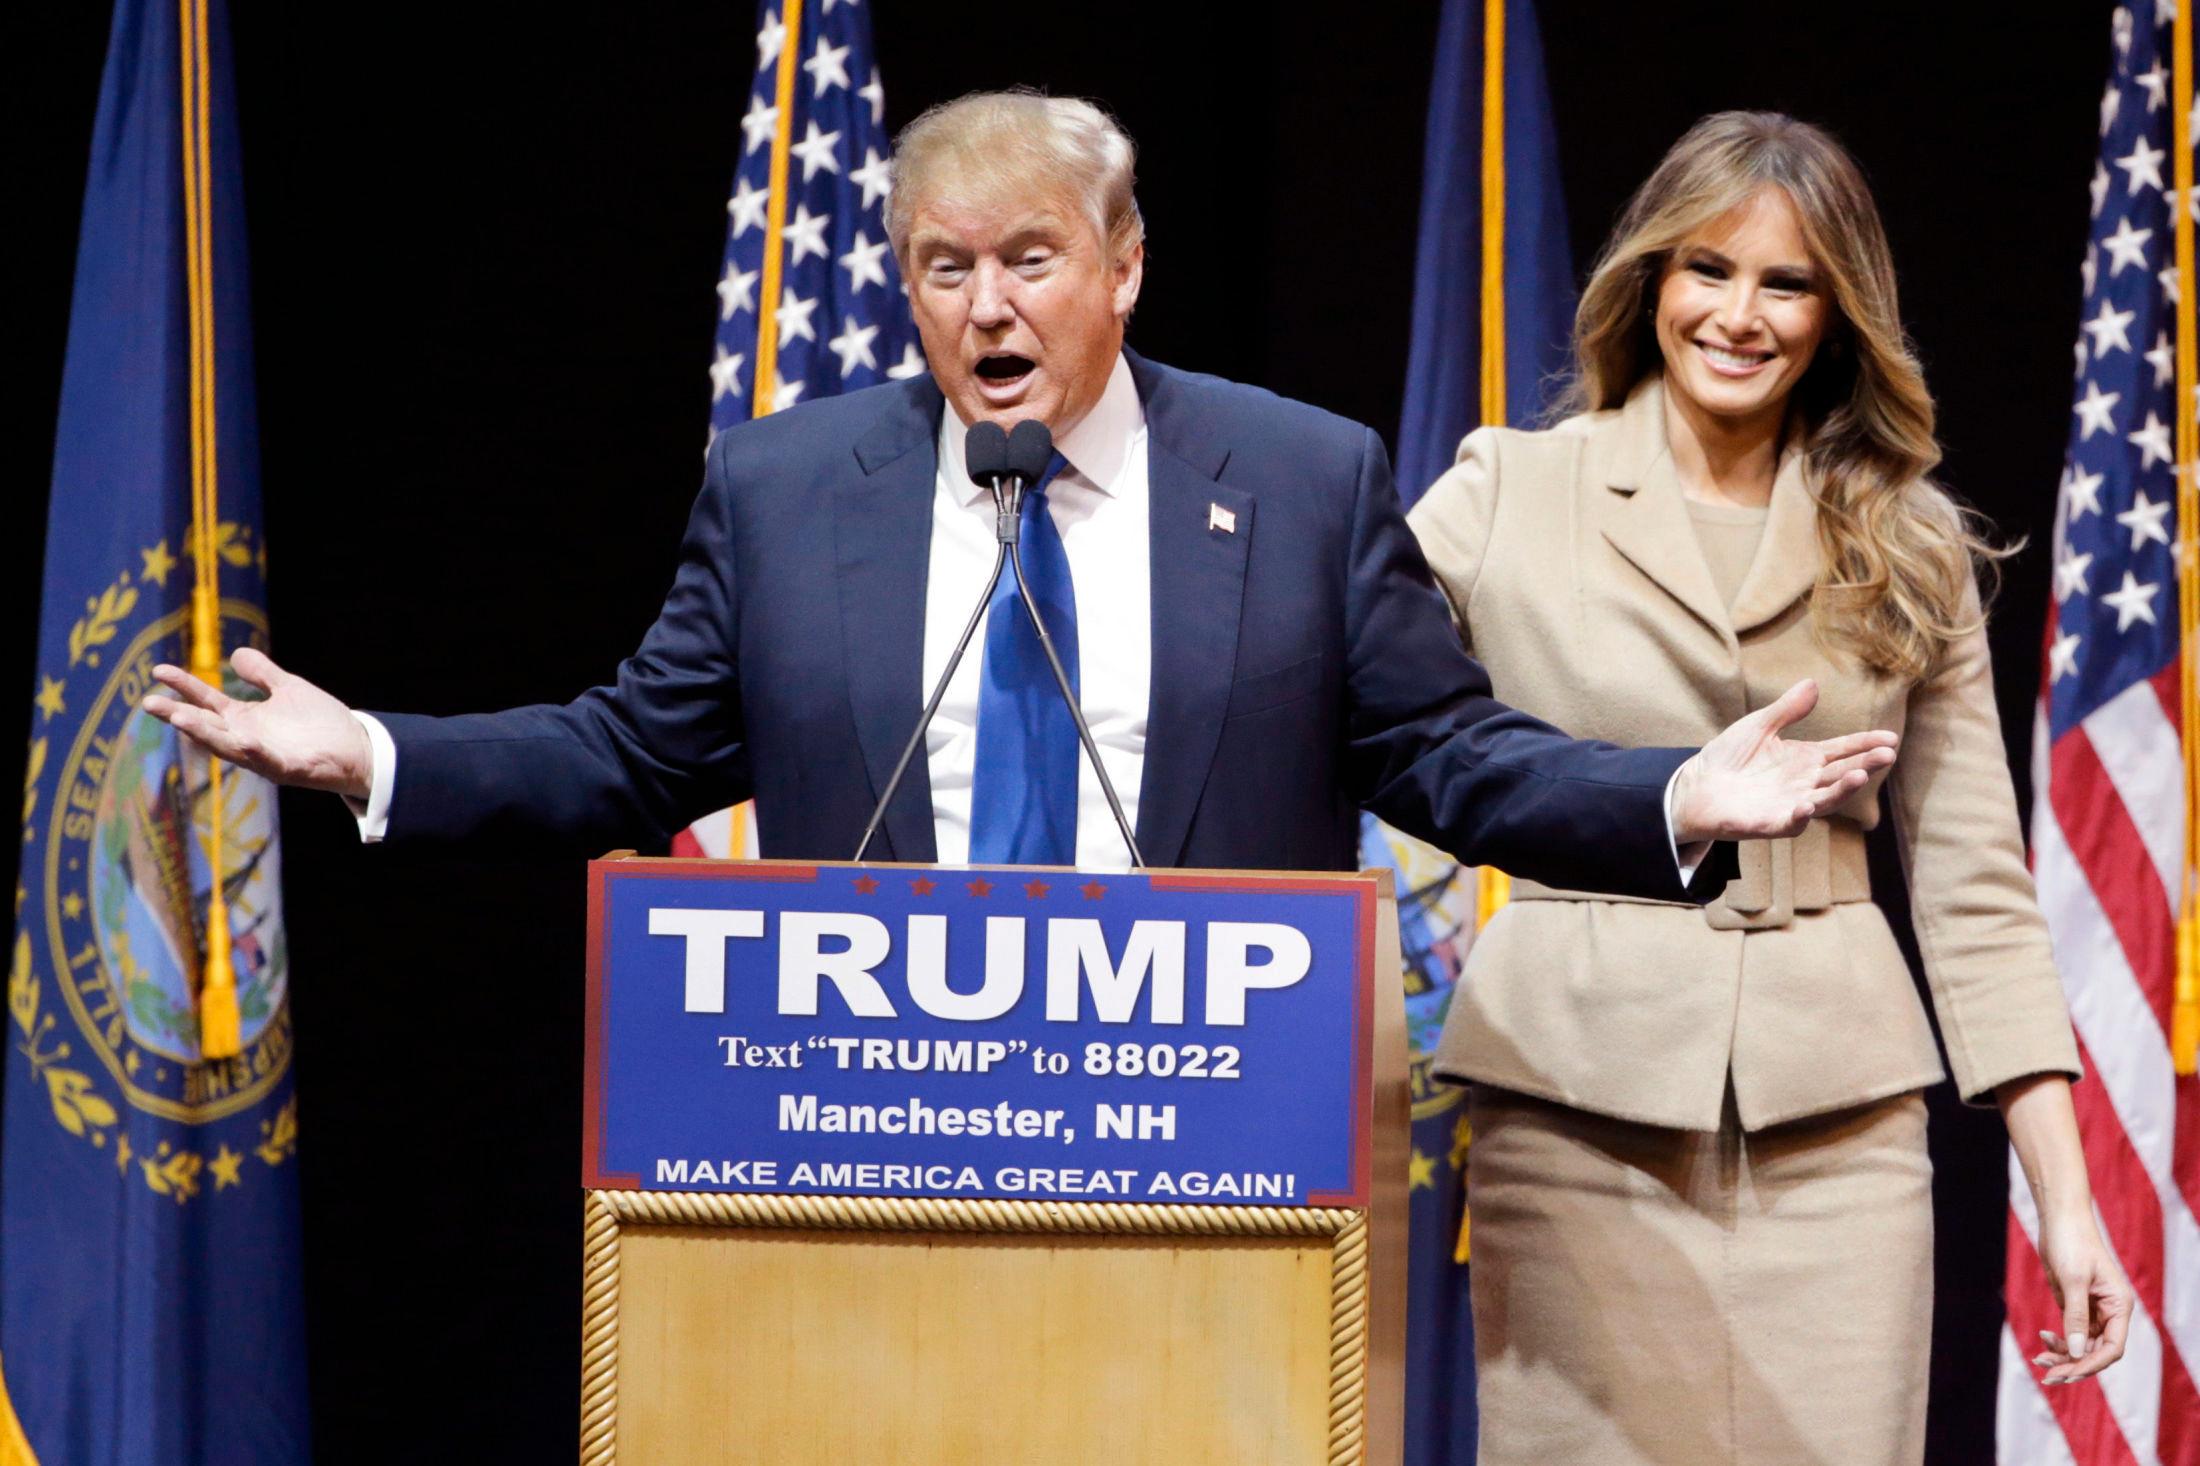 STILIG: Da Donald Trump presenterte Melania under appellen i Manchester, var hun iført en beige, sofistikert ulldrakt med bredt belte i livet. Foto: NTB scanpix